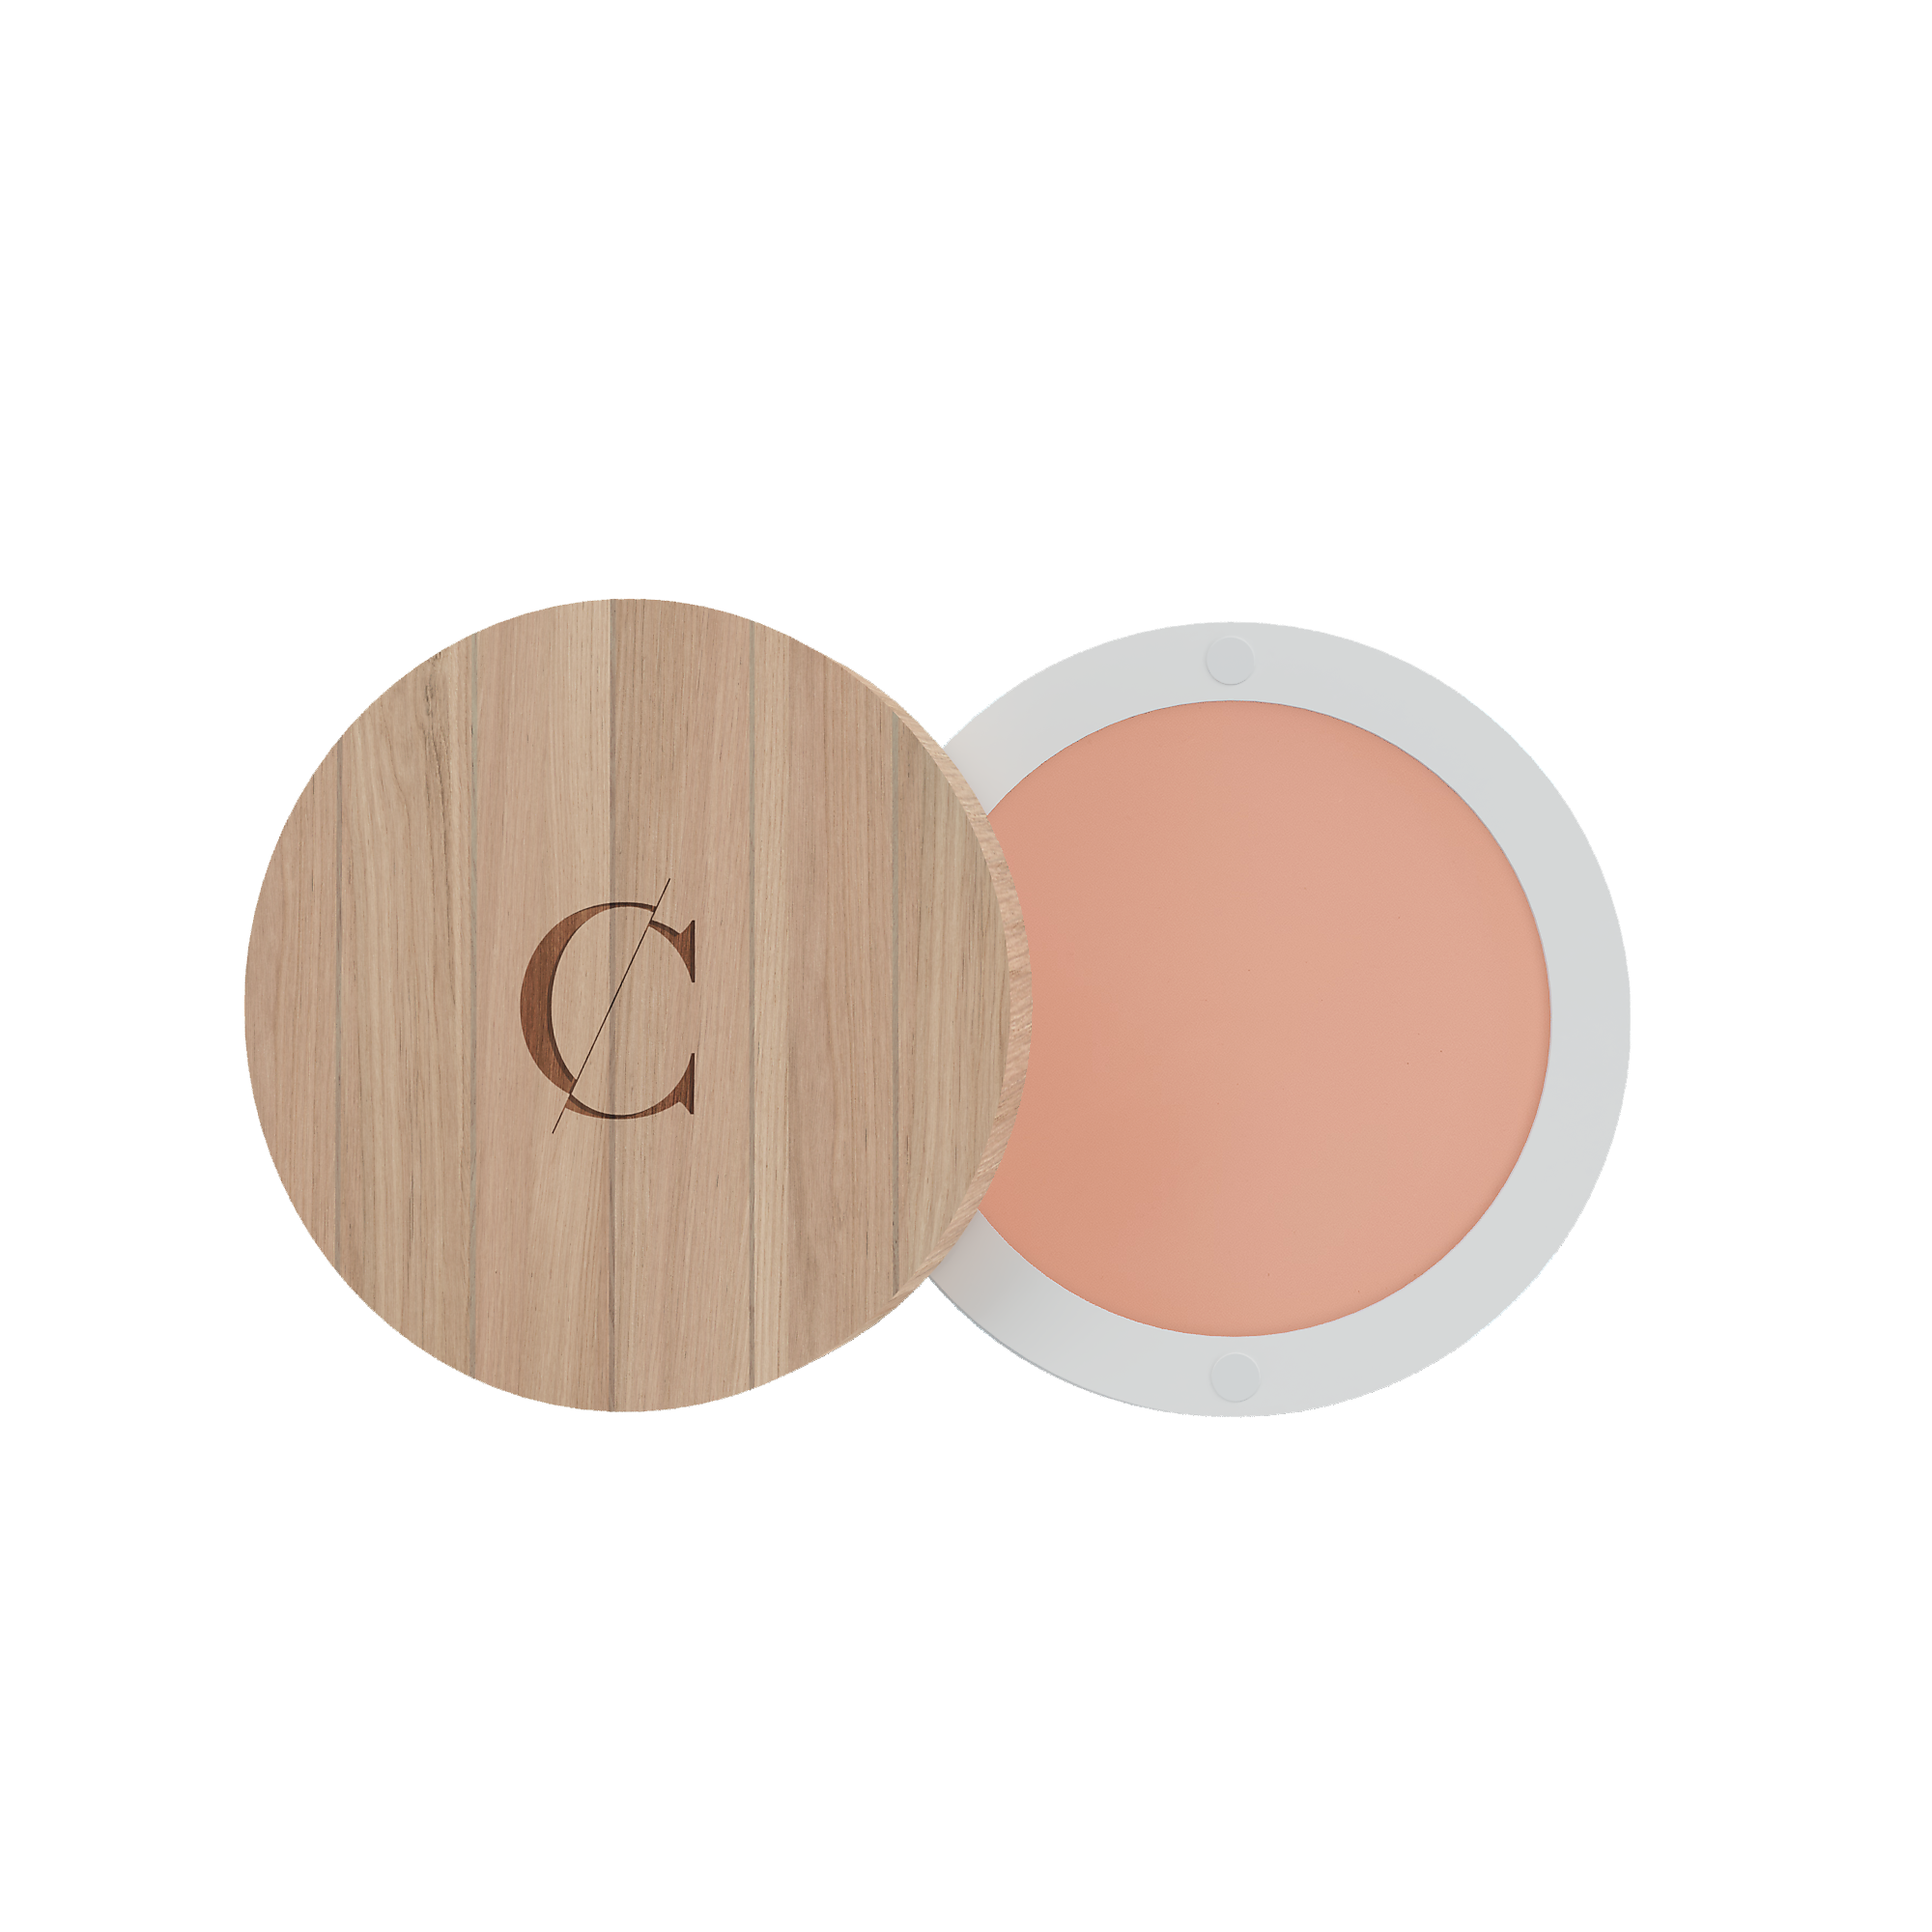 Korektor na kruhy pod očami č.08 - Dark circle concealer n°08 Apricot beige